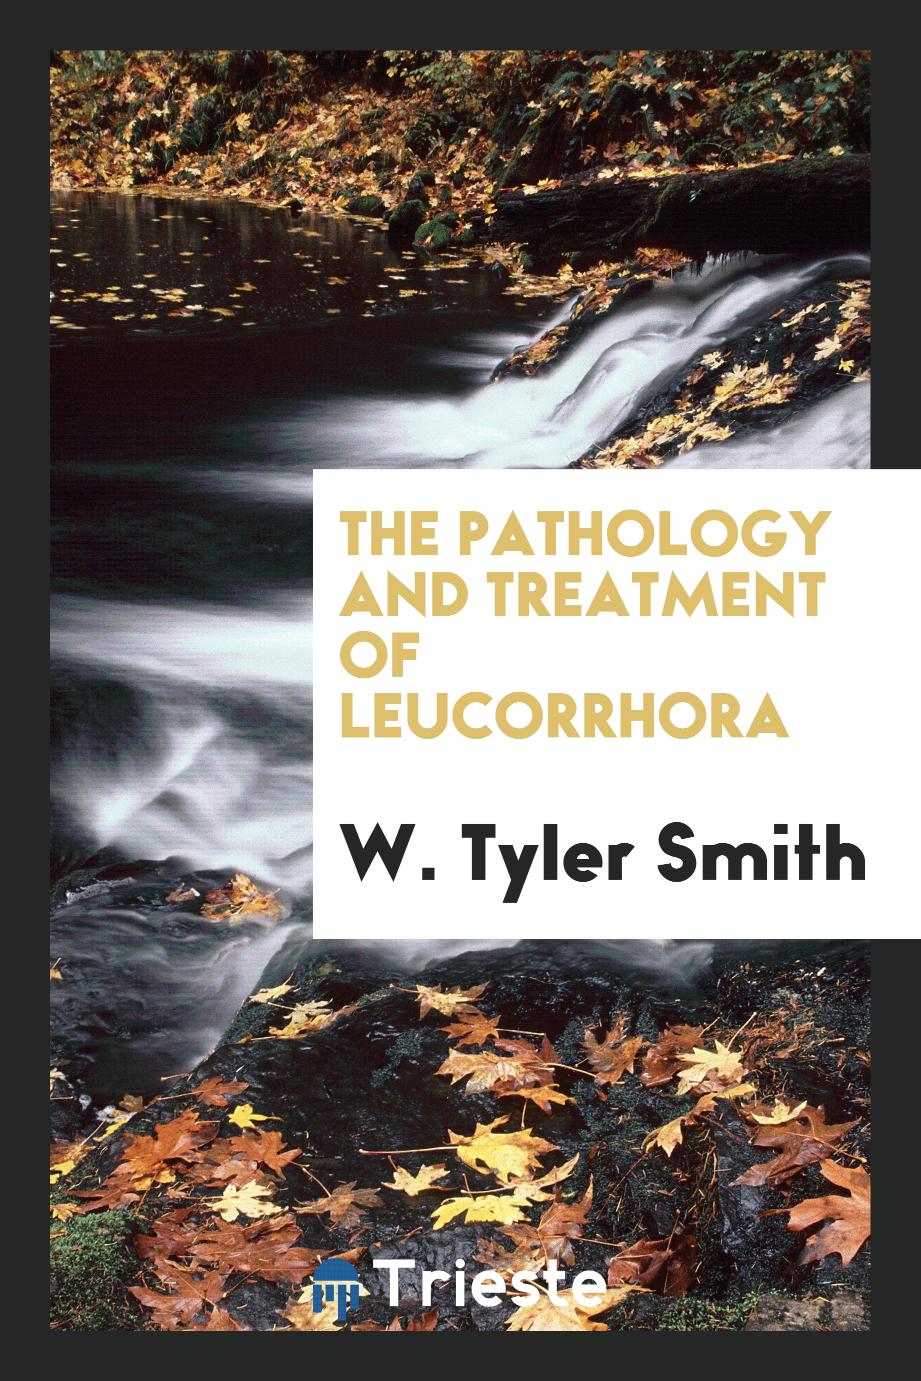 The pathology and treatment of leucorrhora